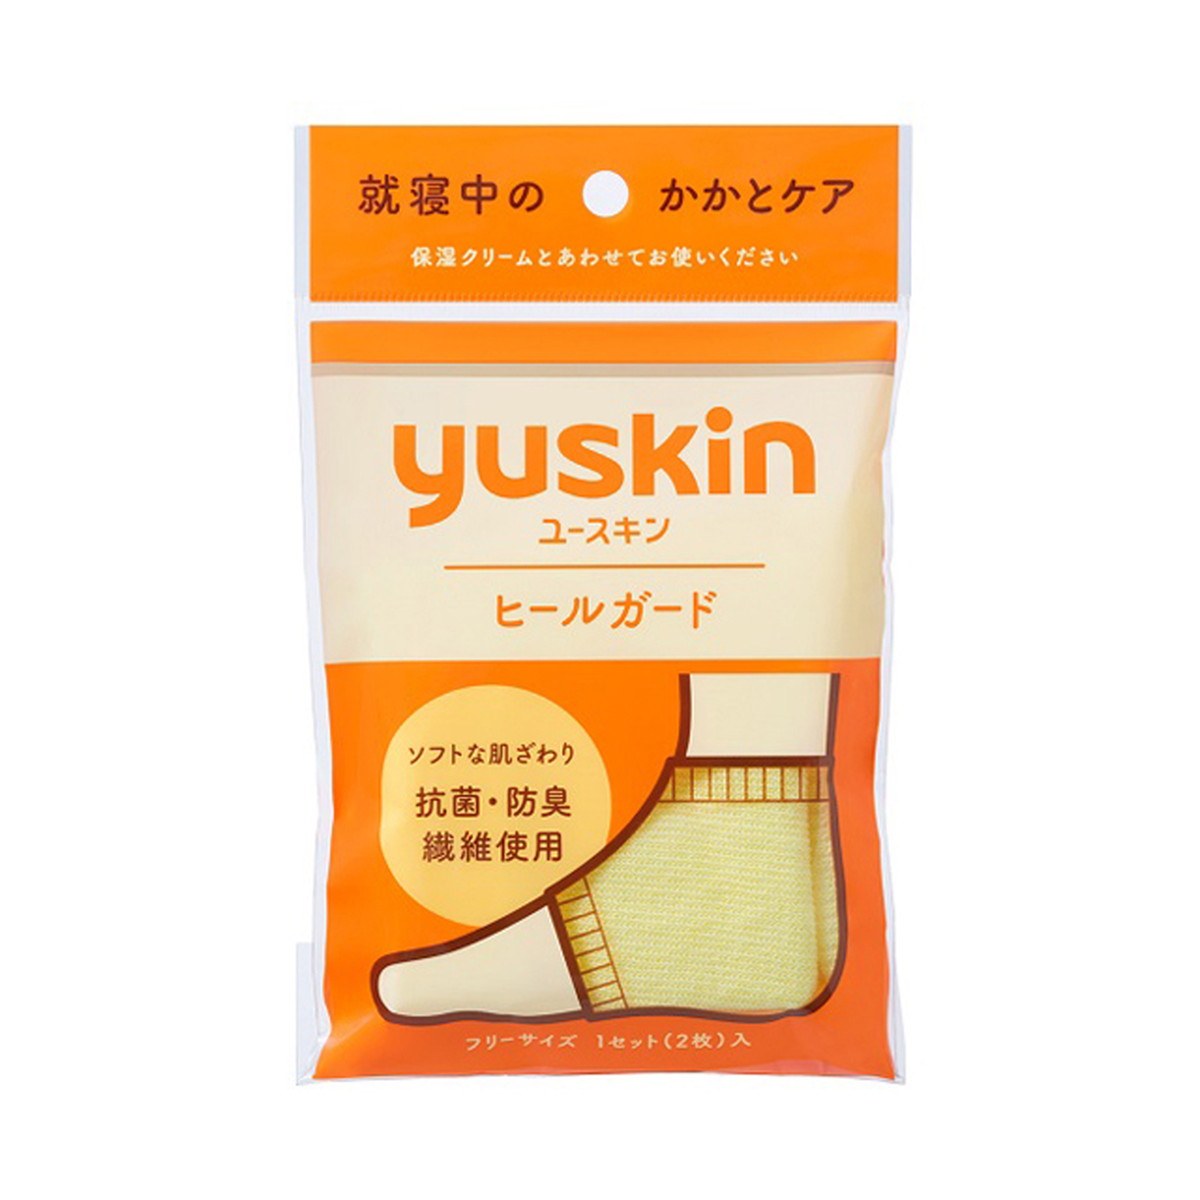 yuskin ユースキン ヒールガード セット（2020年8月31日販売終了） ハンドケア用品の商品画像